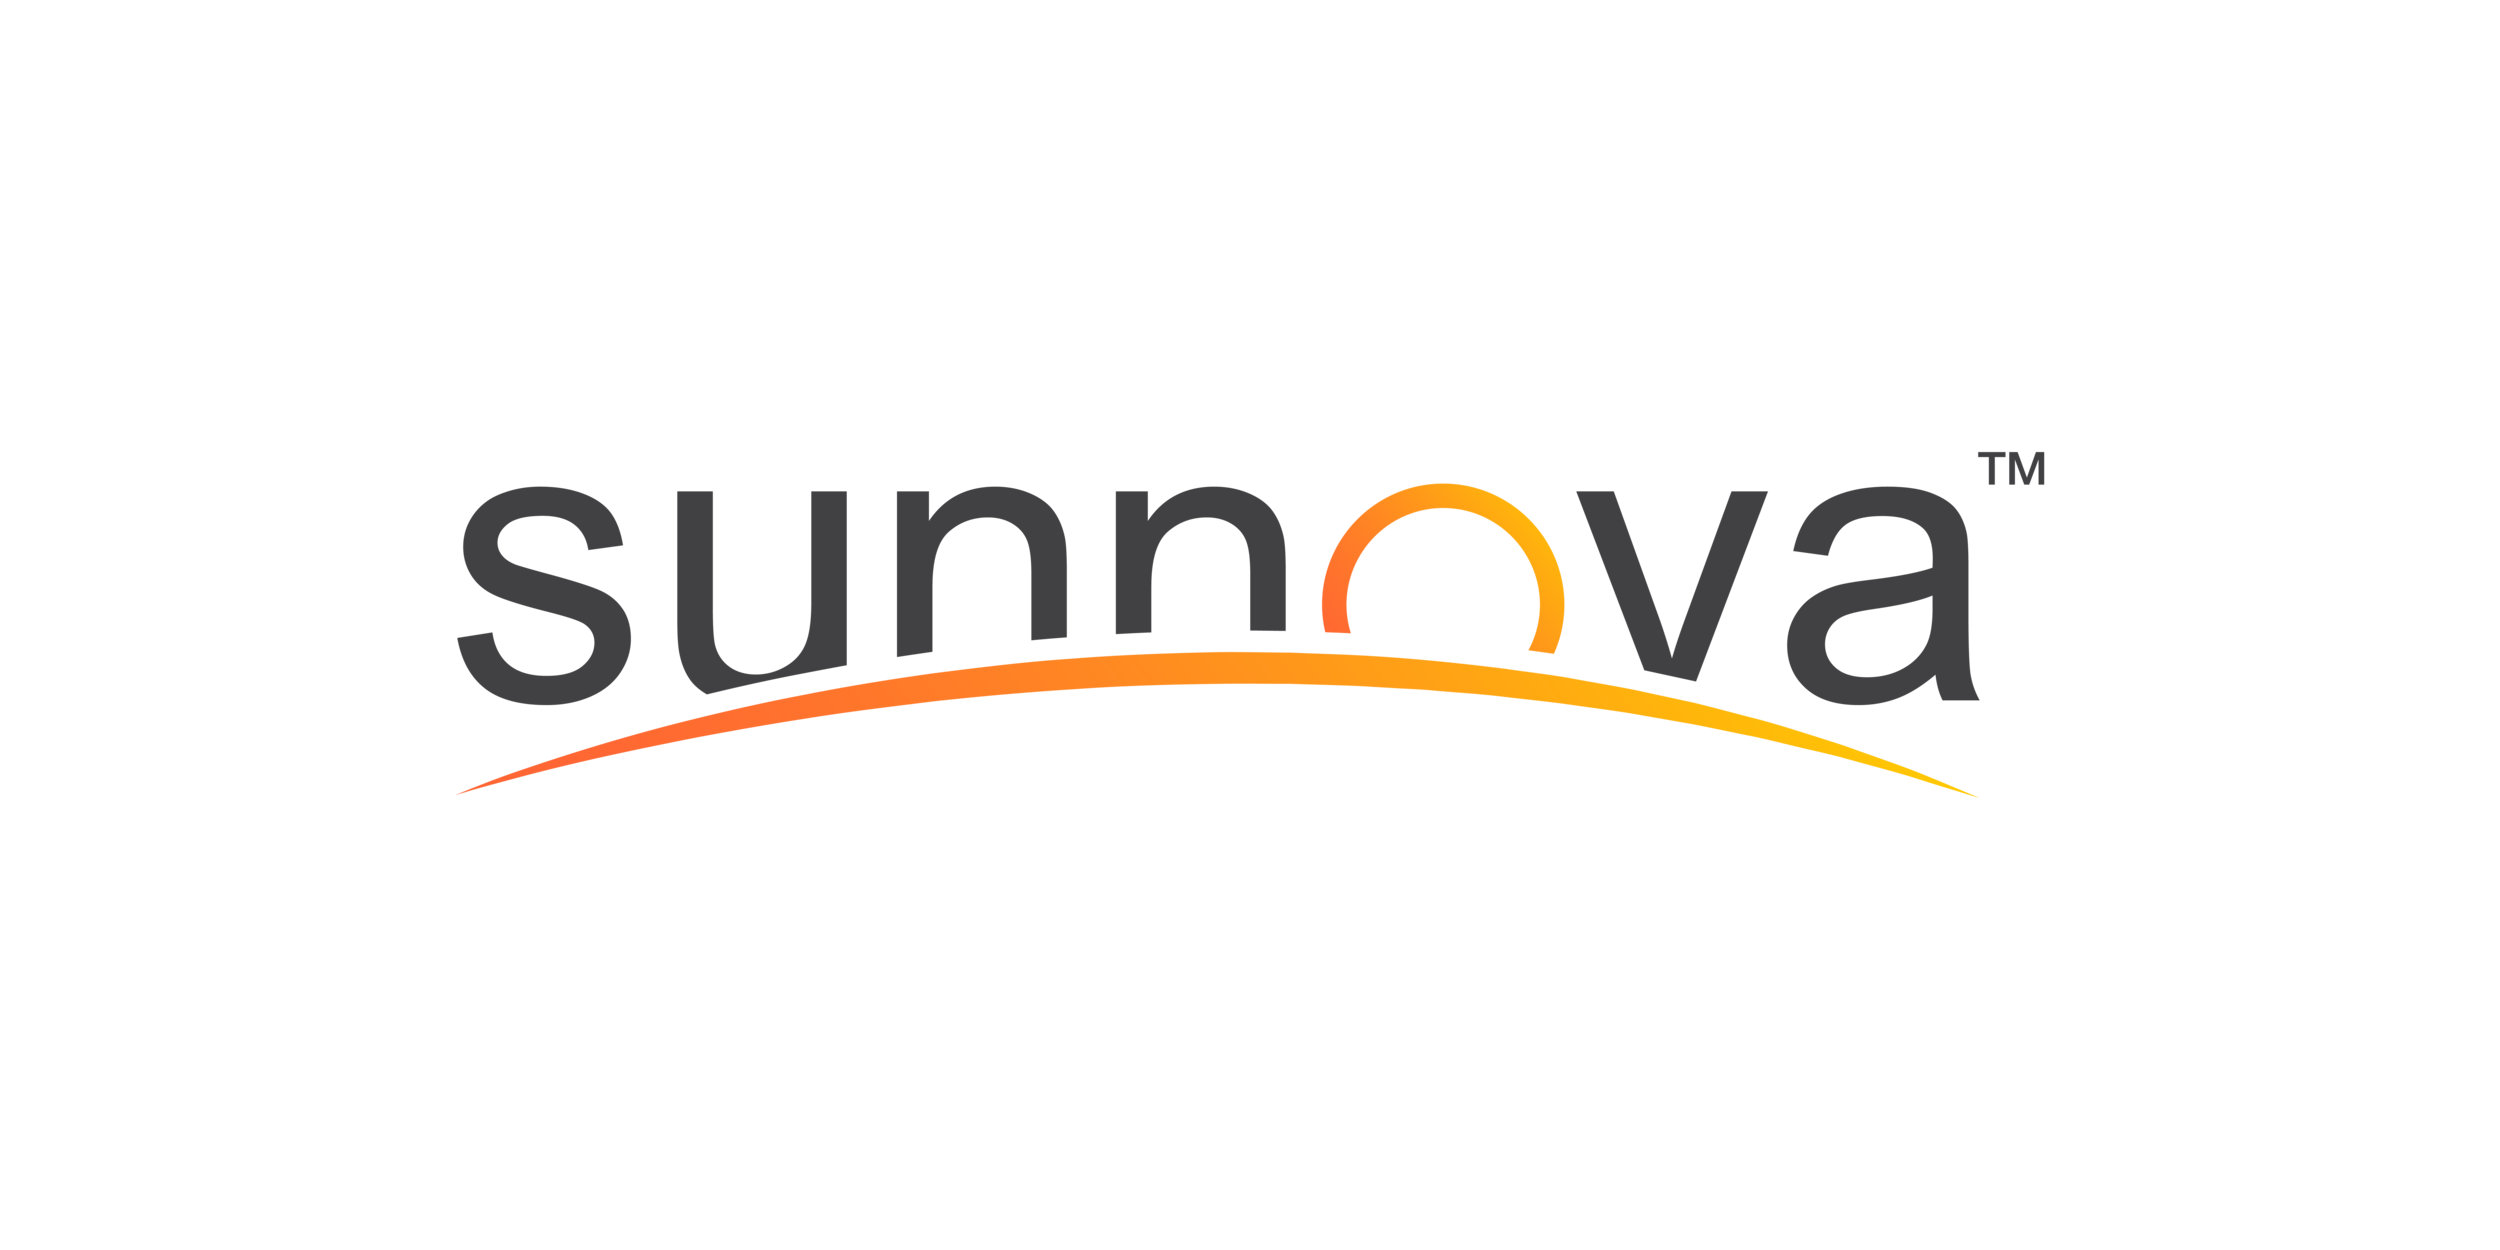 Sunnova